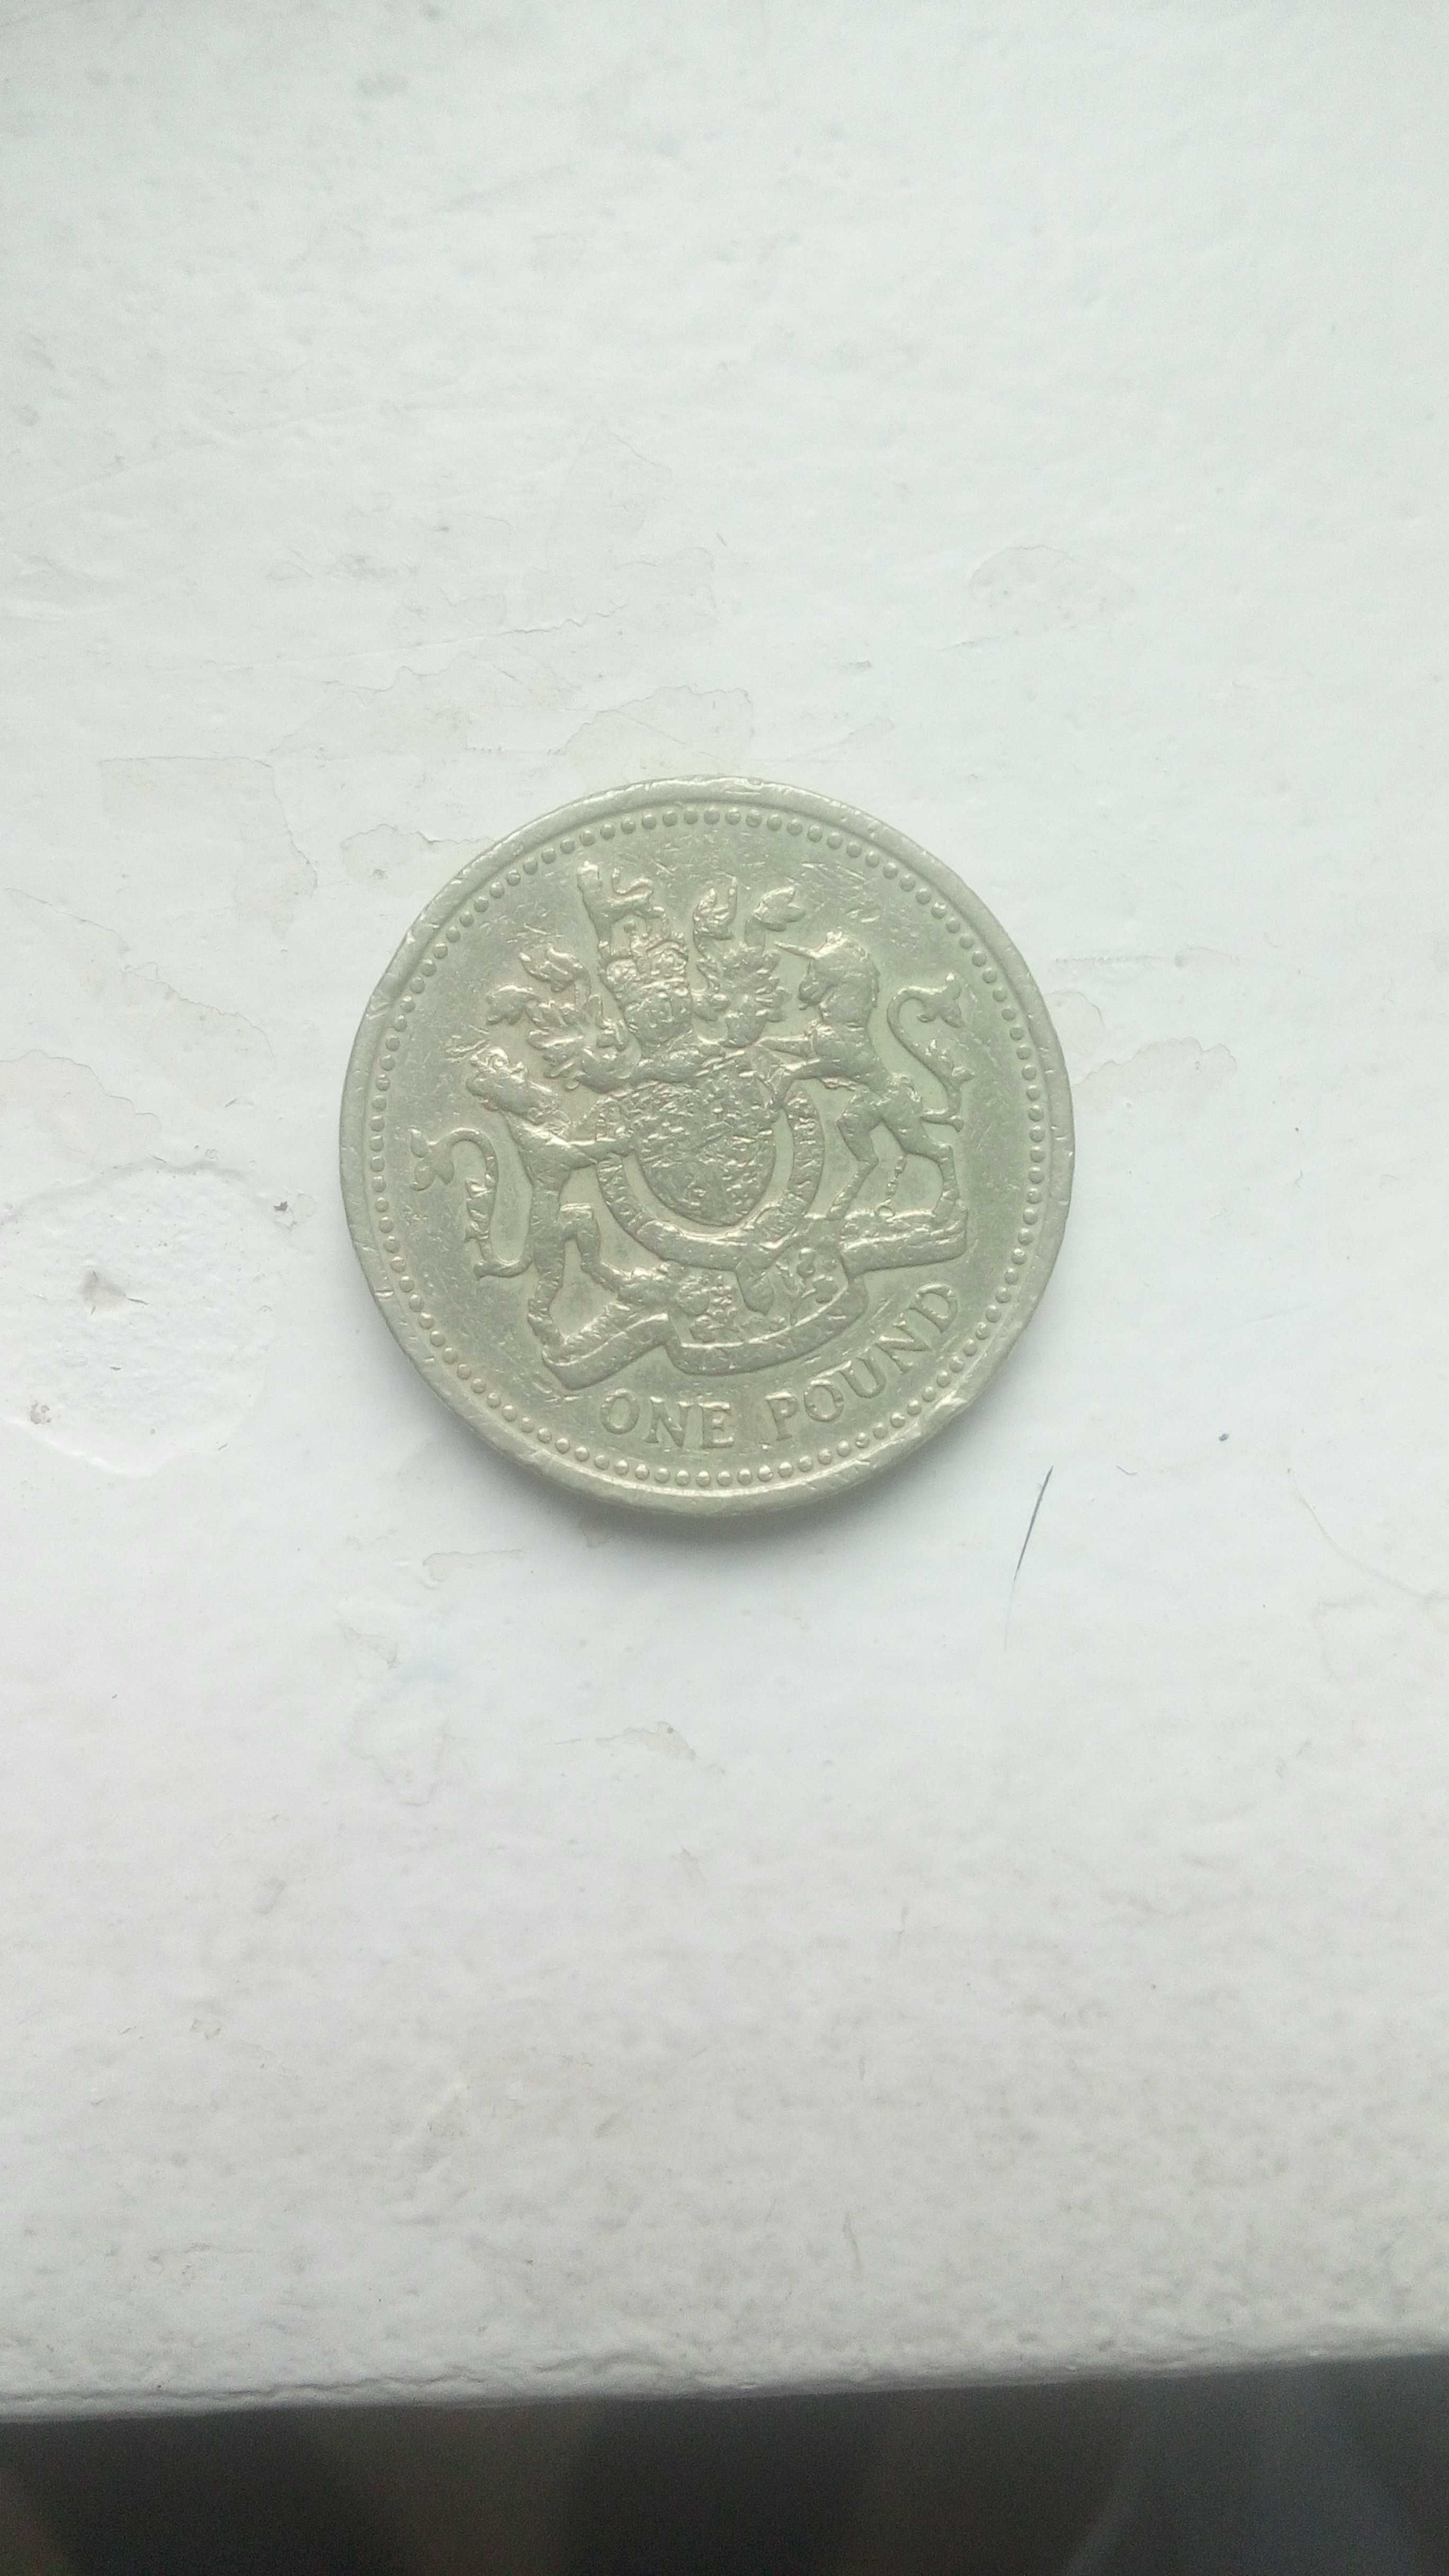 One pound/Монета Єлизавета 2 1983 року